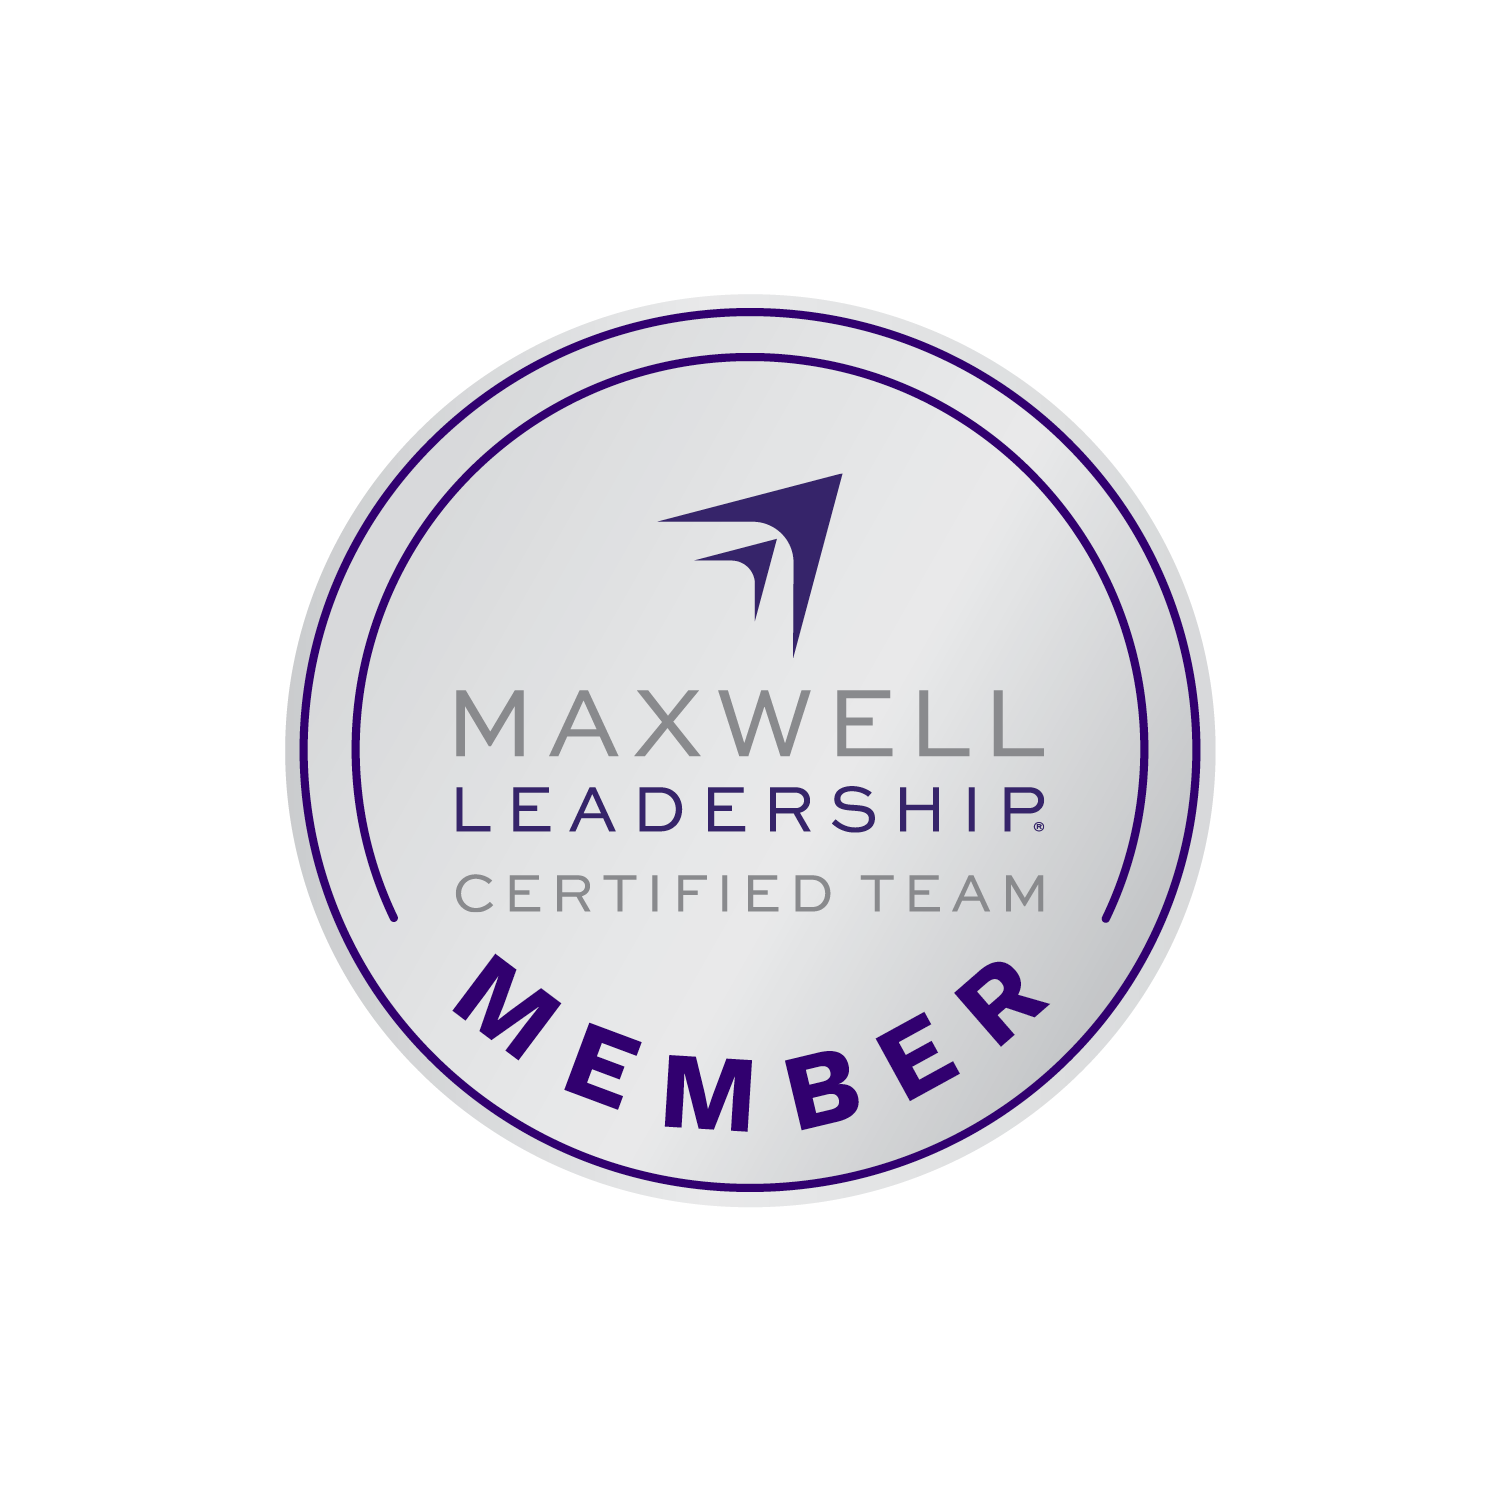 John Maxwell Leadership Certified Trainer, Speaker and Coach